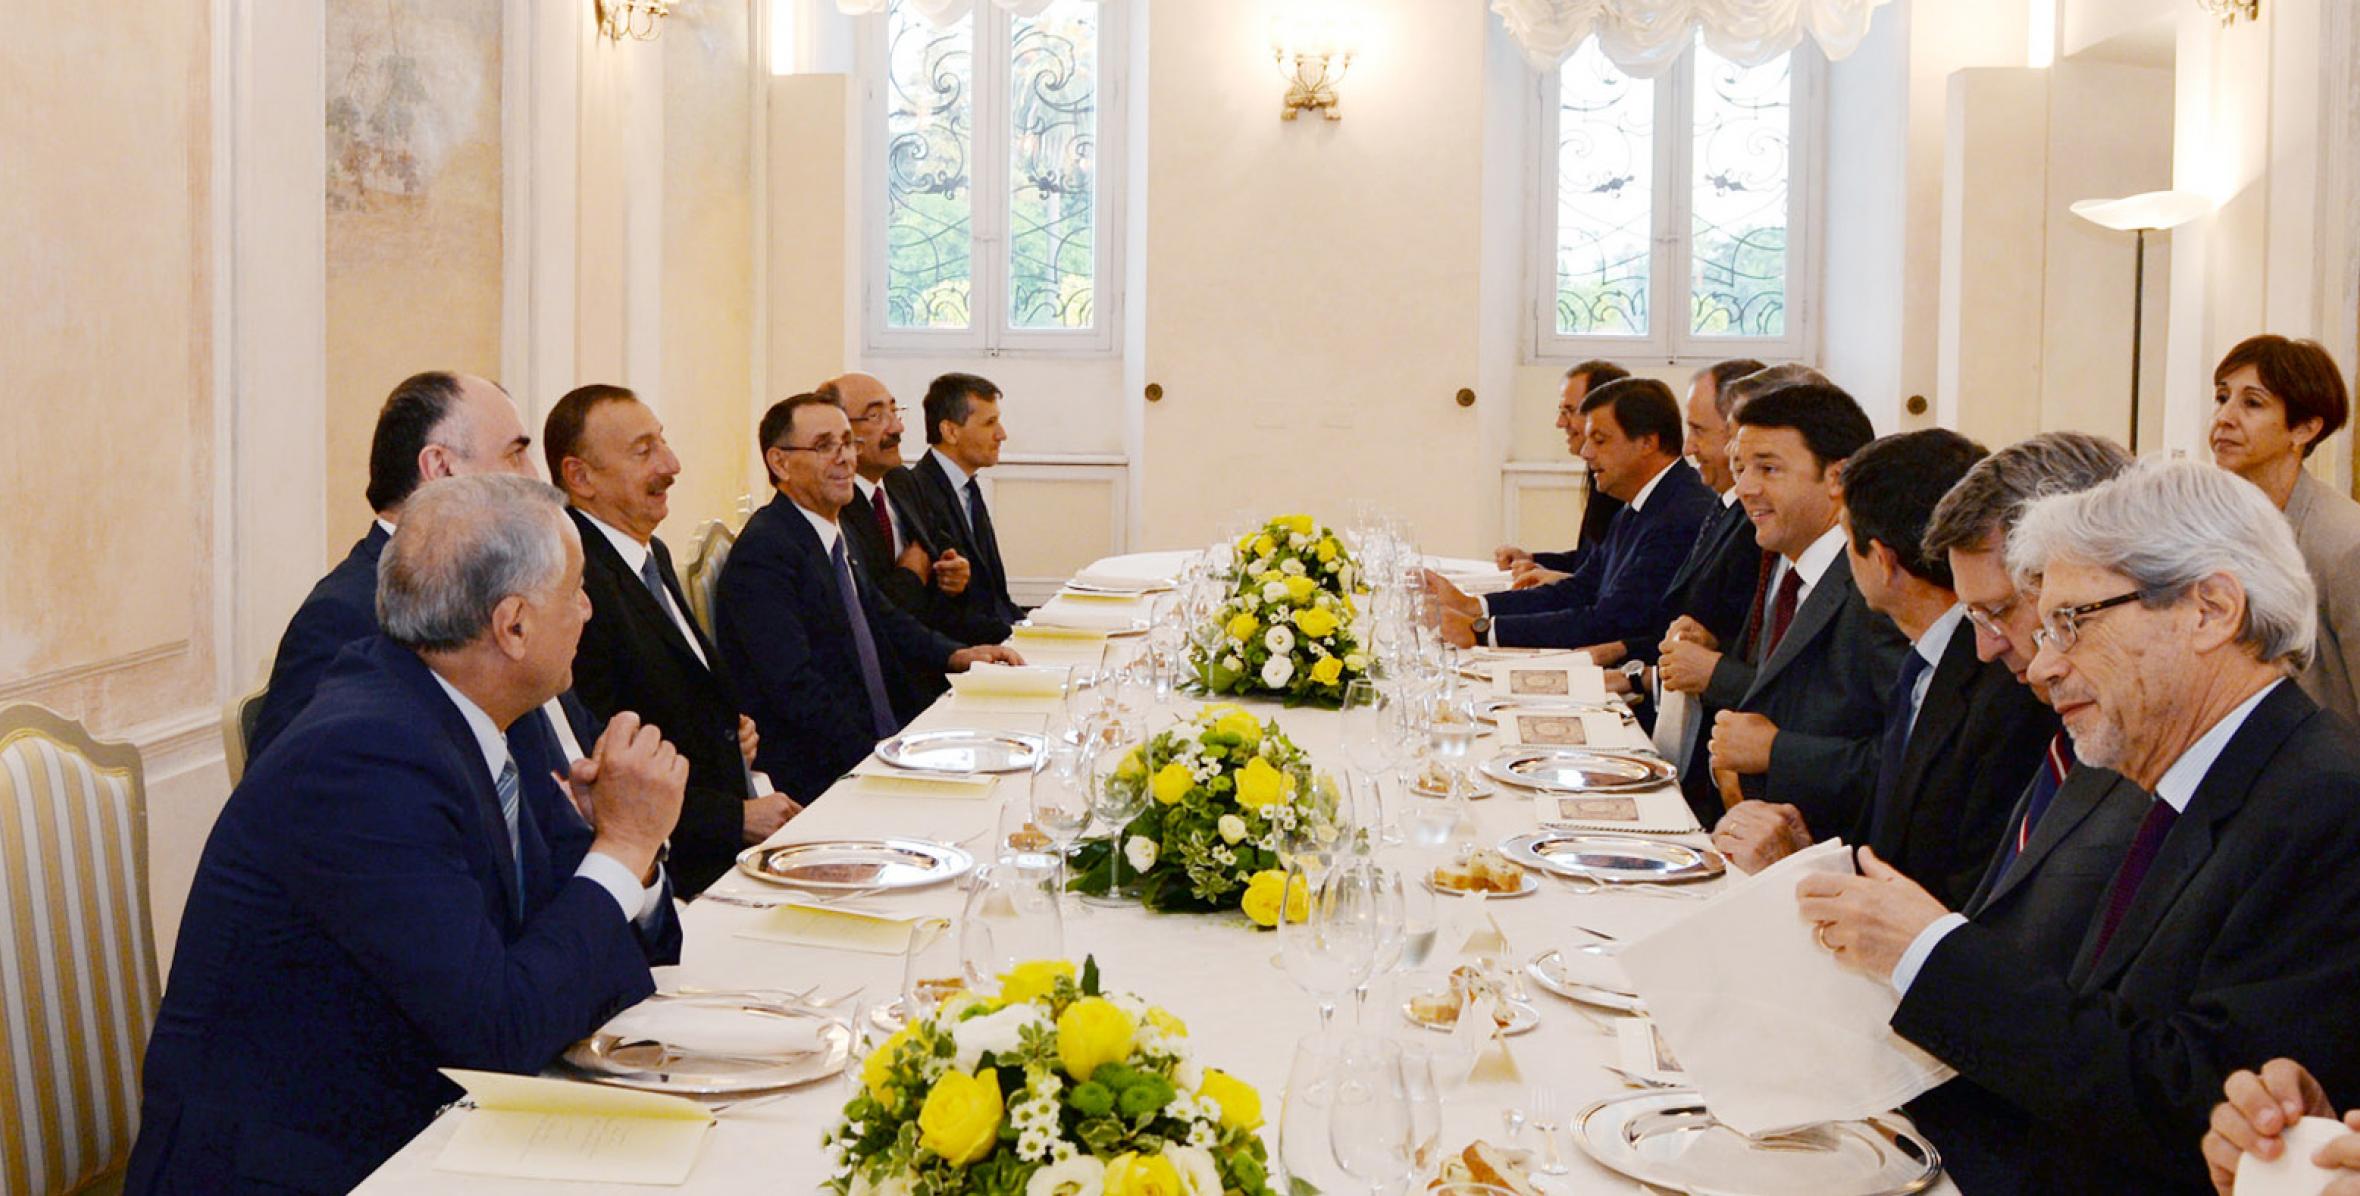 Dinner reception was hosted on behalf of Italian Premier Matteo Renzi in honor of President of Azerbaijan Ilham Aliyev